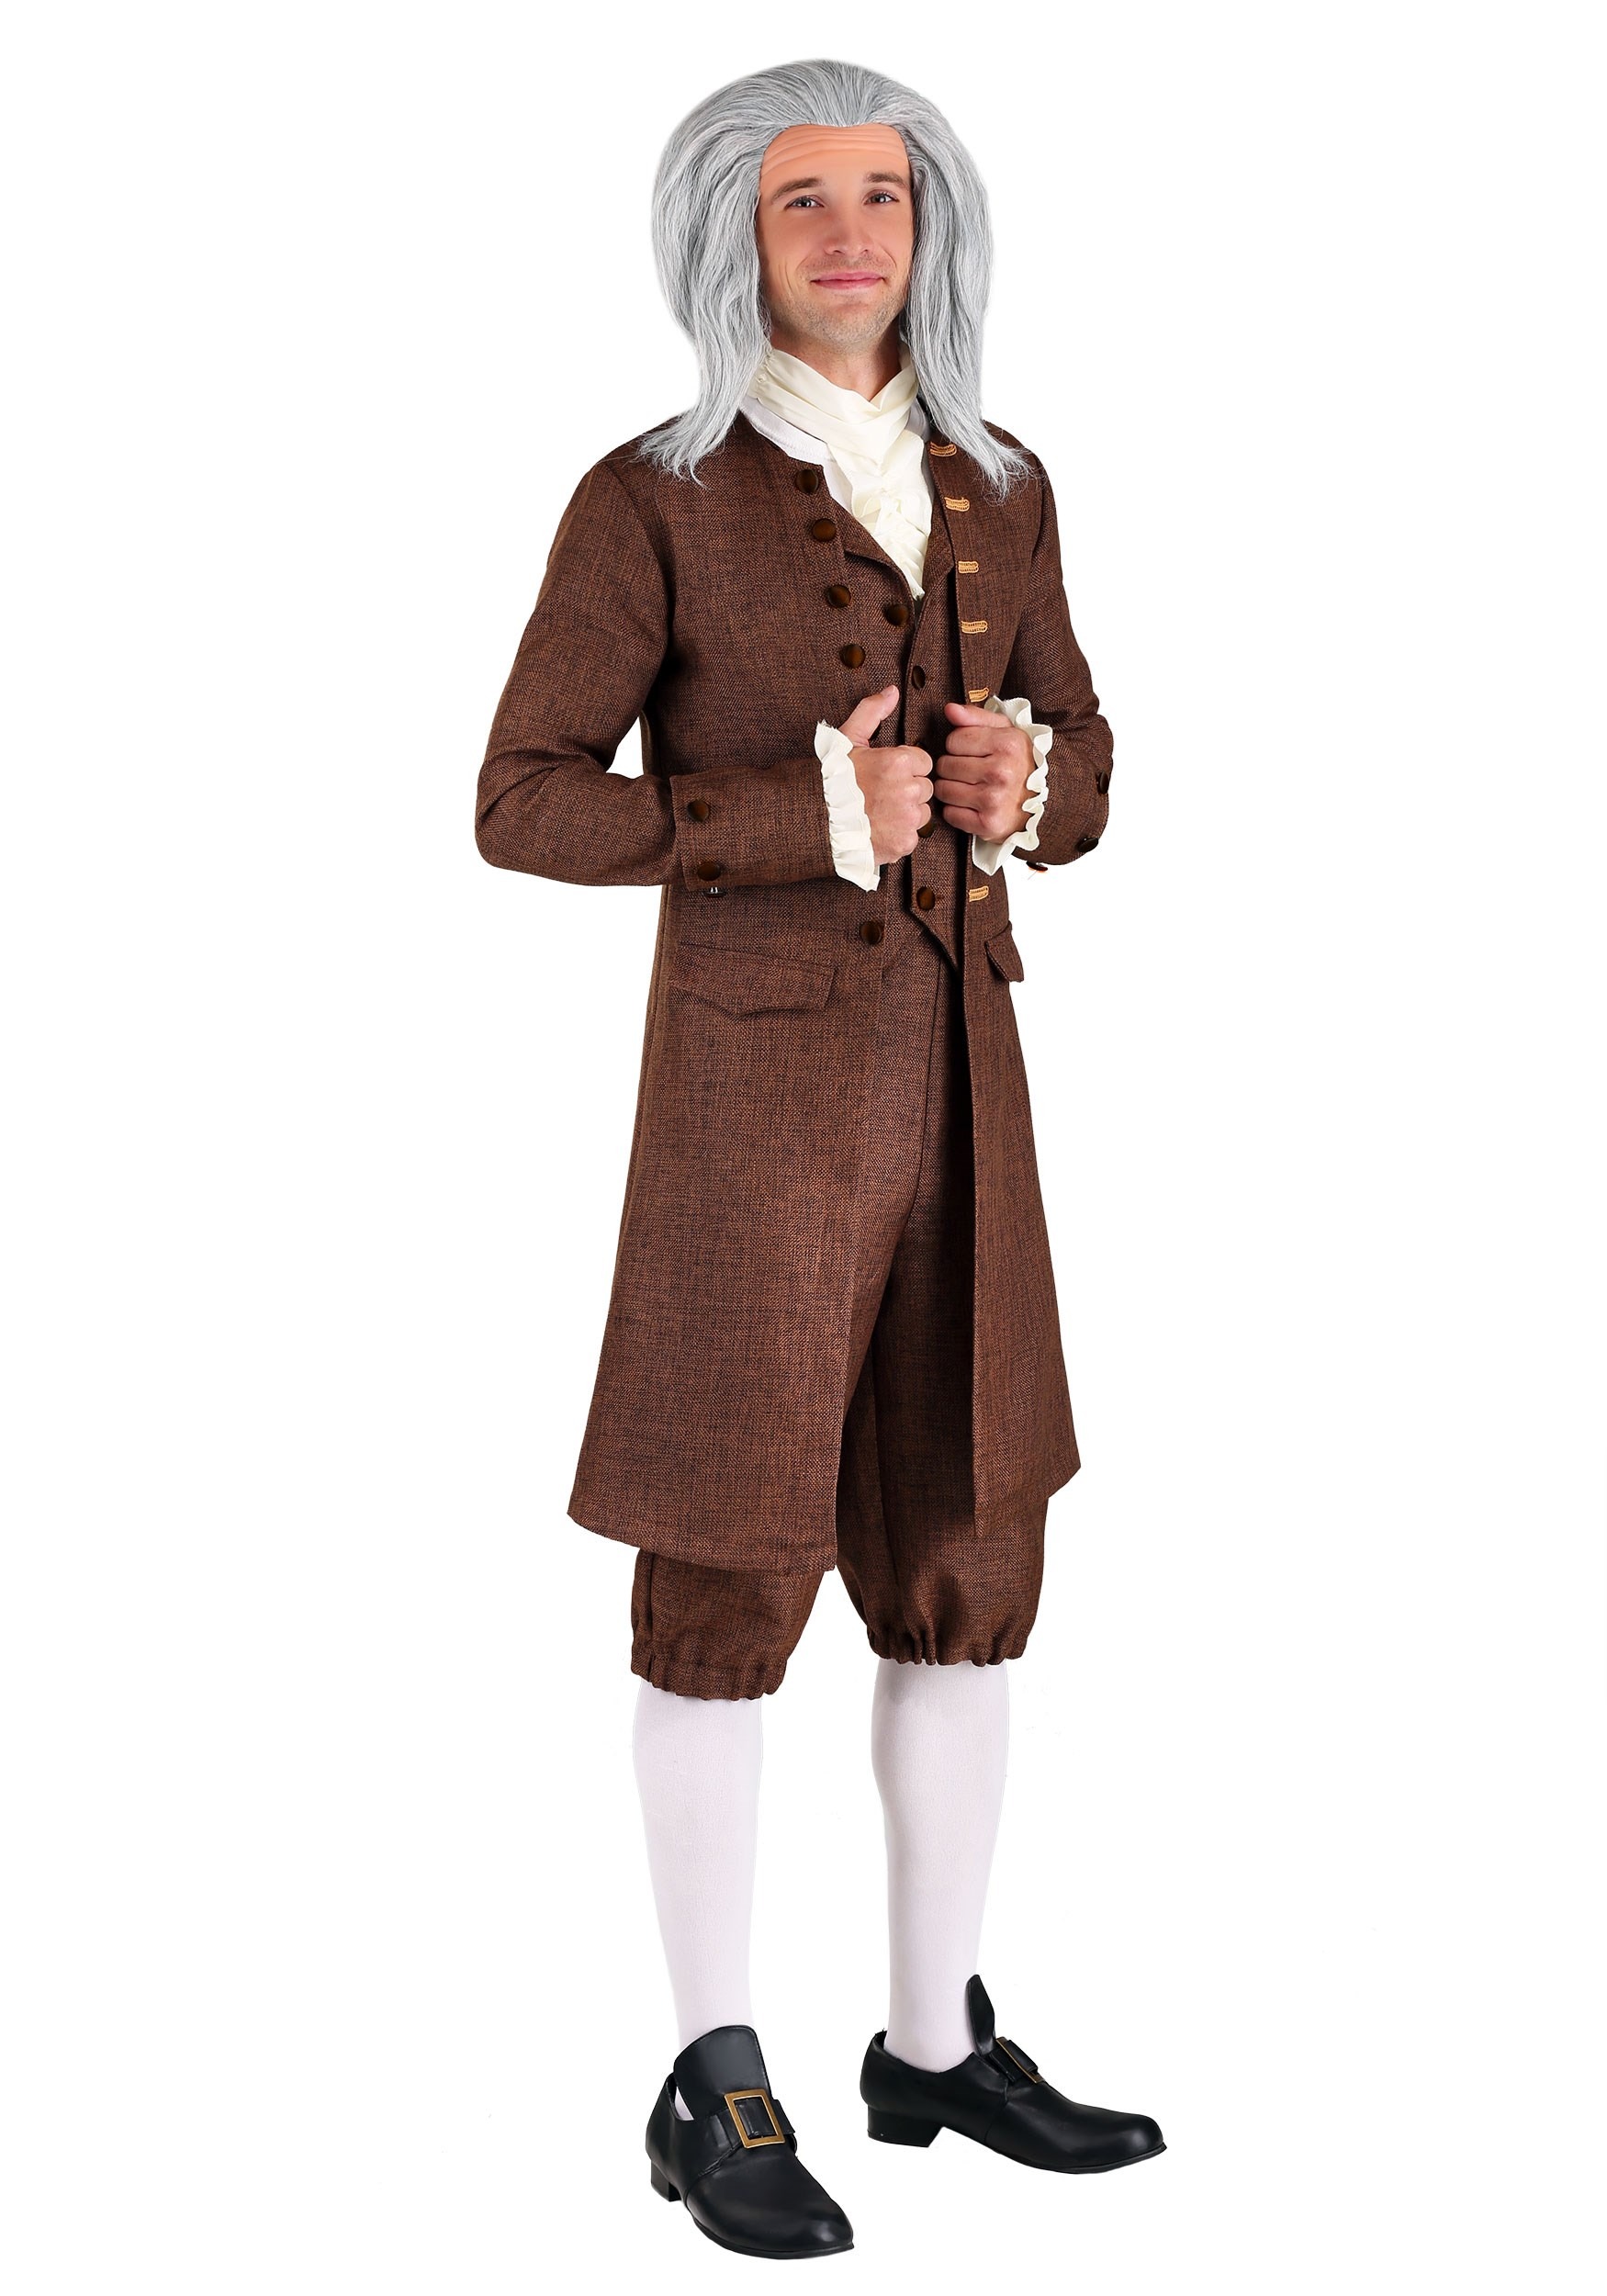 Colonial Benjamin Franklin Fancy Dress Costume For Men's